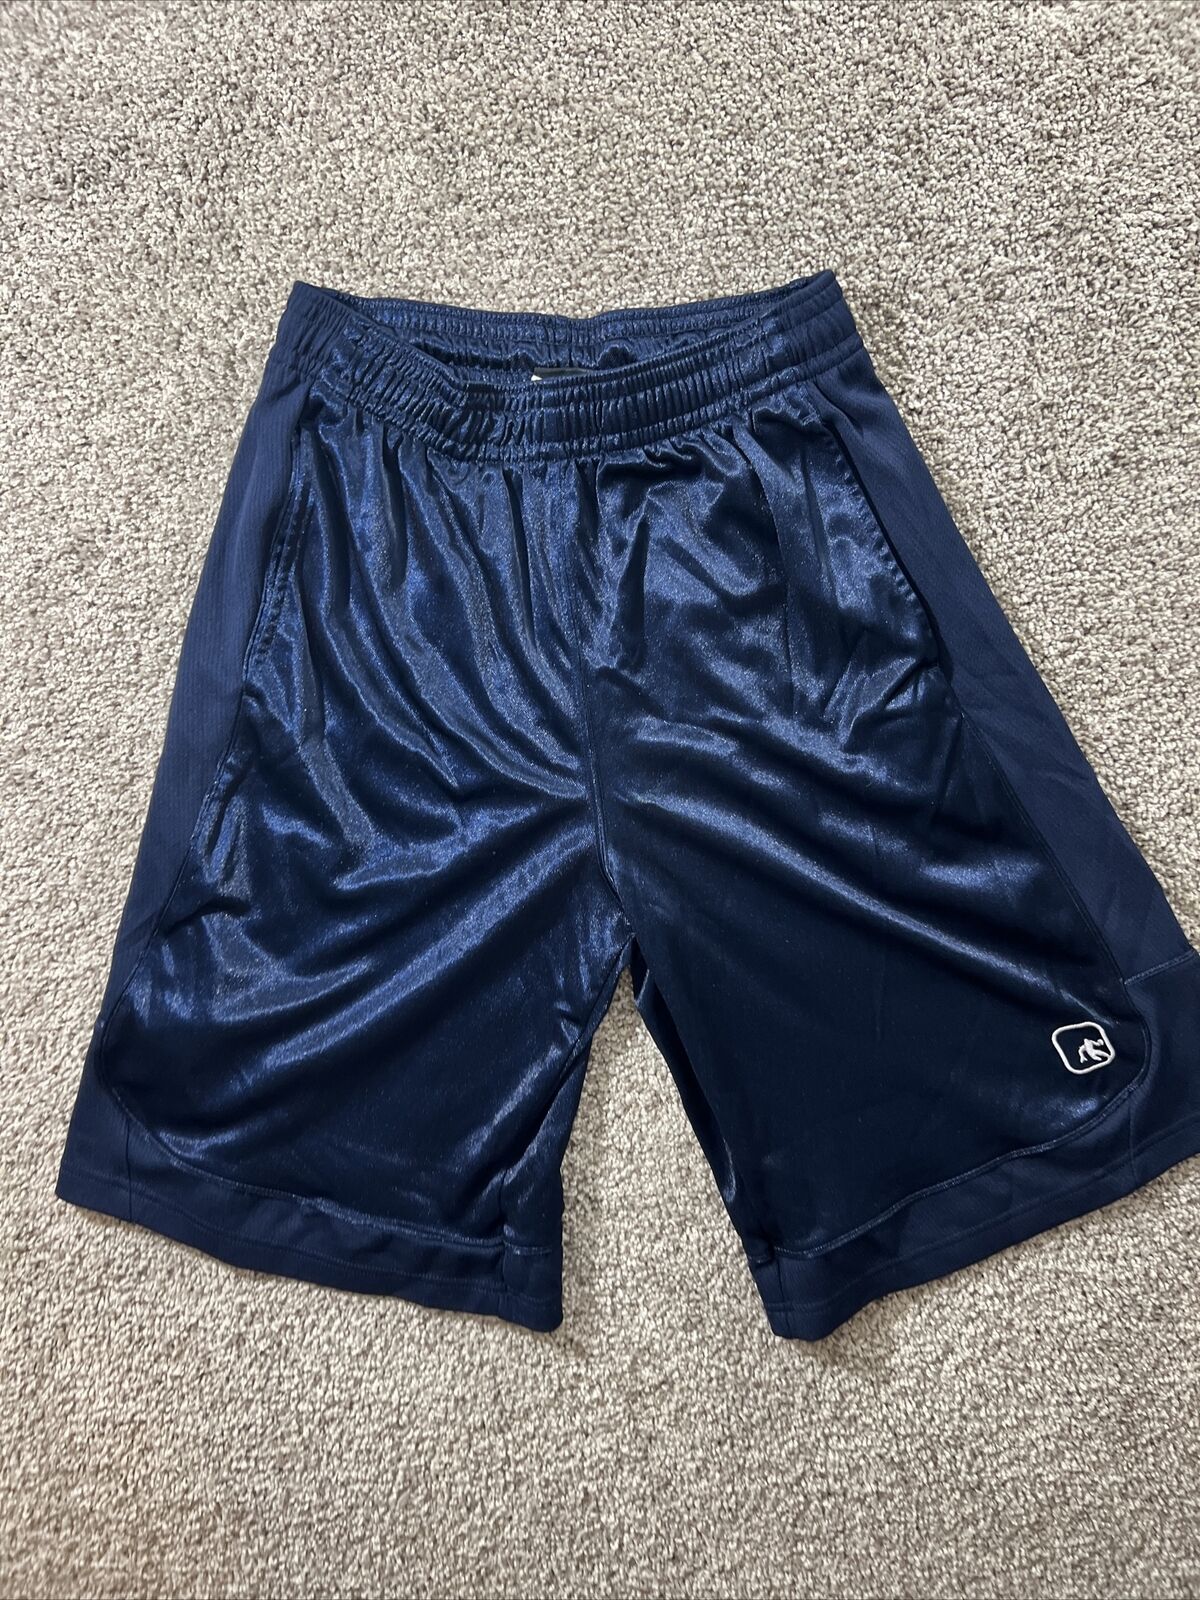 Vintage 90s AND 1 One Blue White Basketball Shorts Mens Size Medium